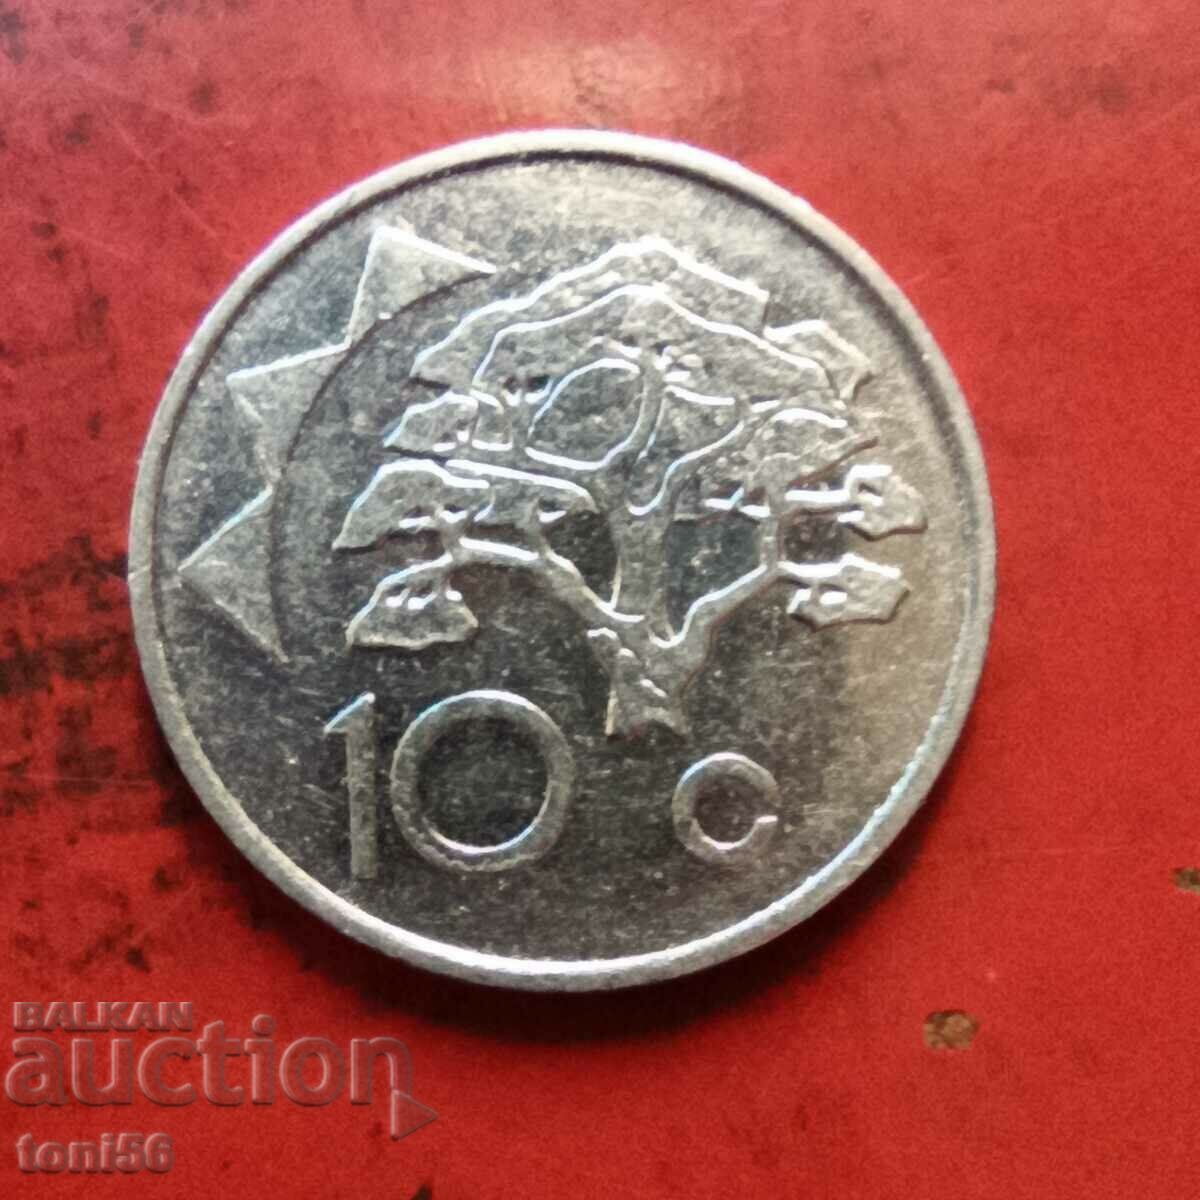 Namibia 10 cents 1993